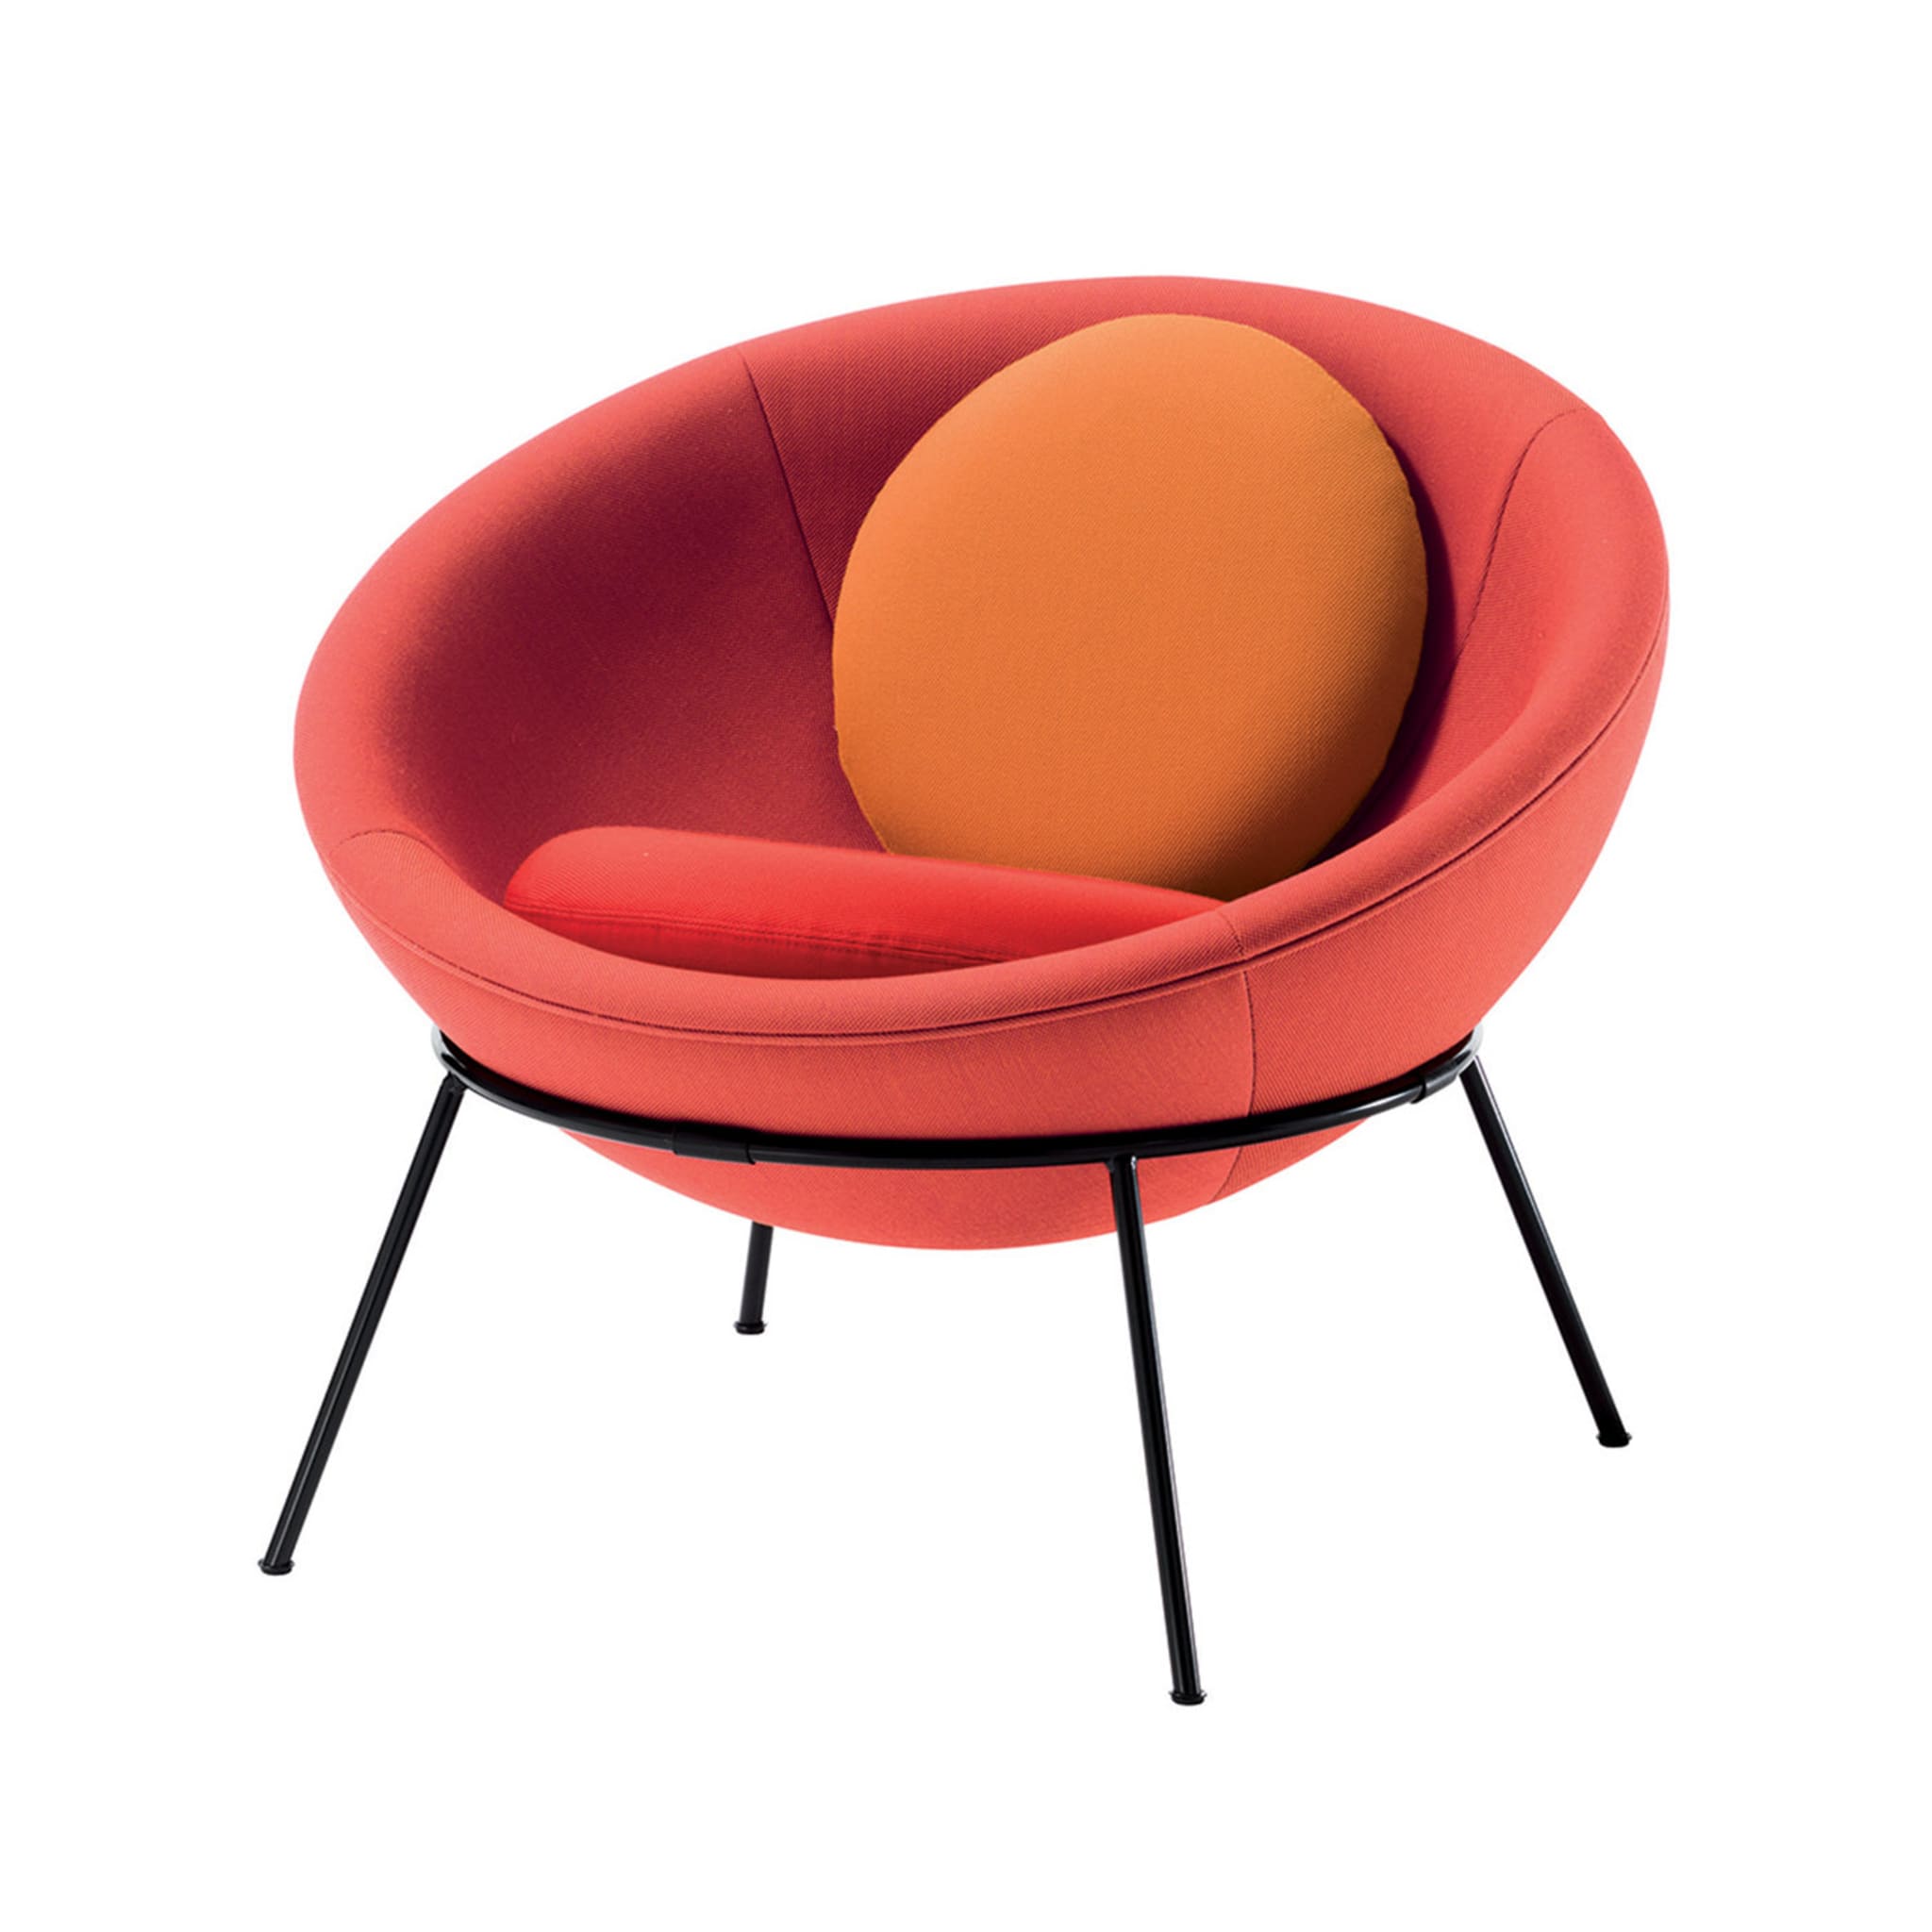 Bardi's Bowl Chair Orange Nuance - Alternative view 1